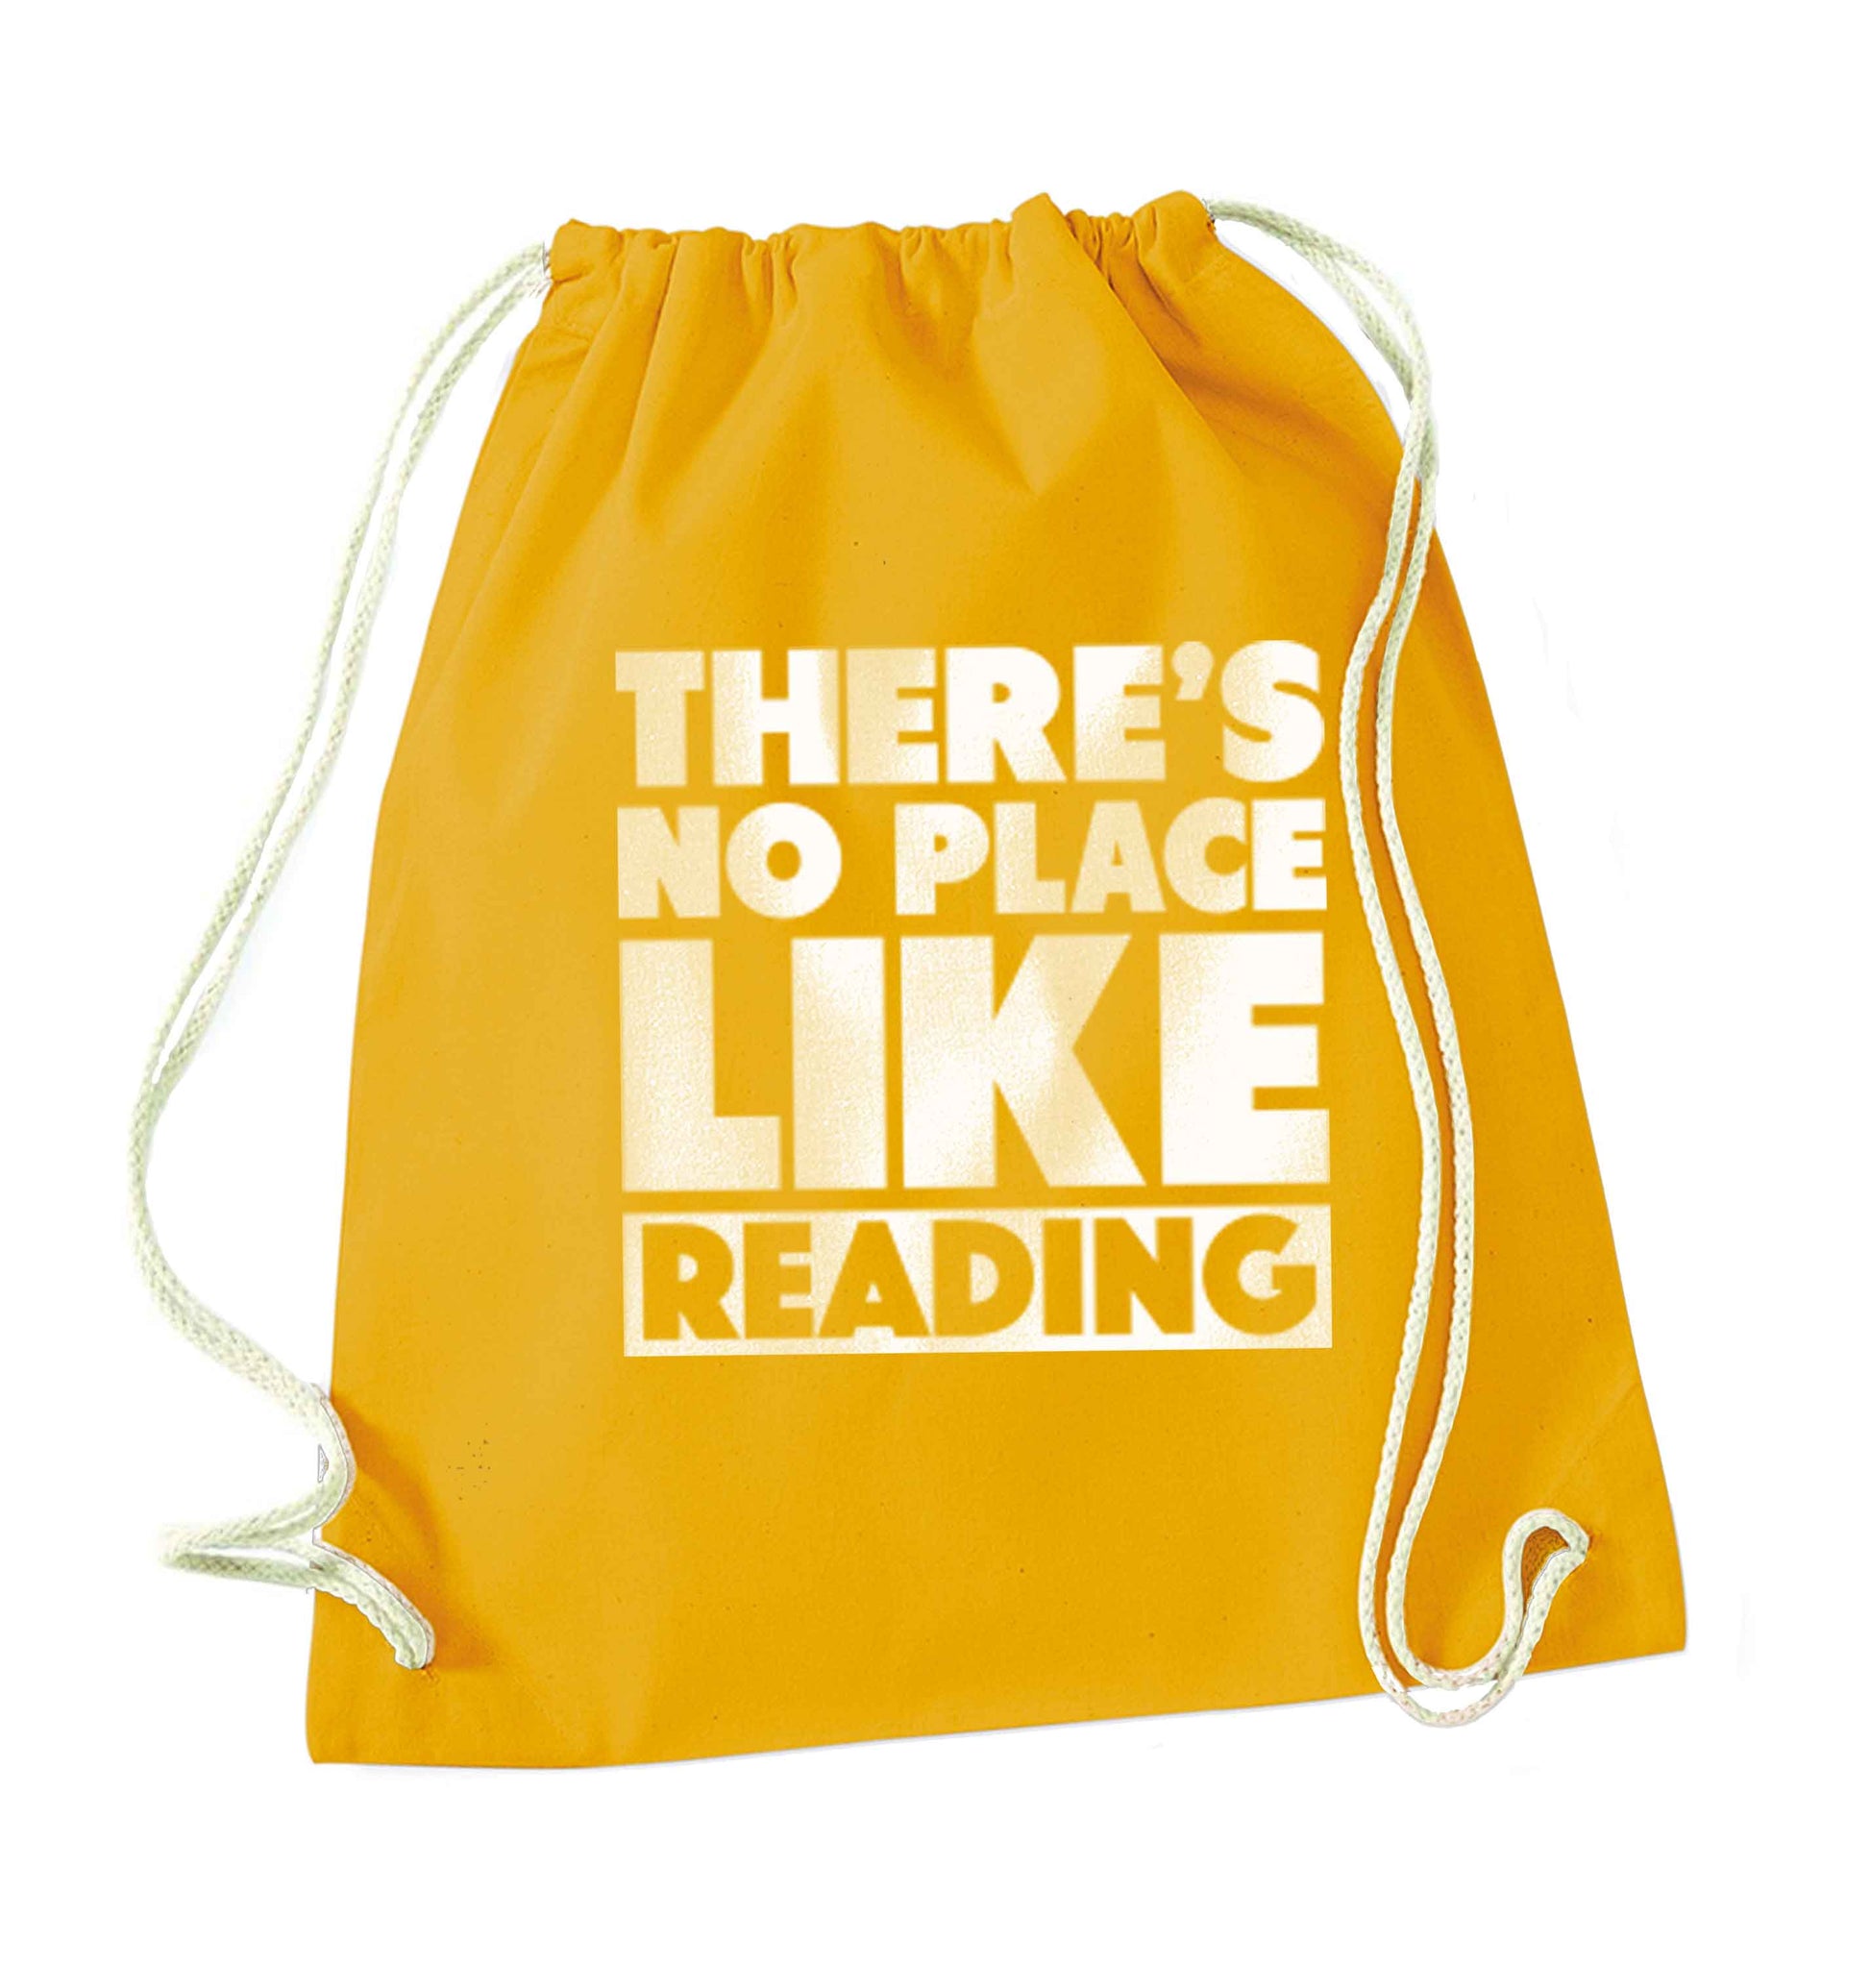 There's no place like Readingmustard drawstring bag